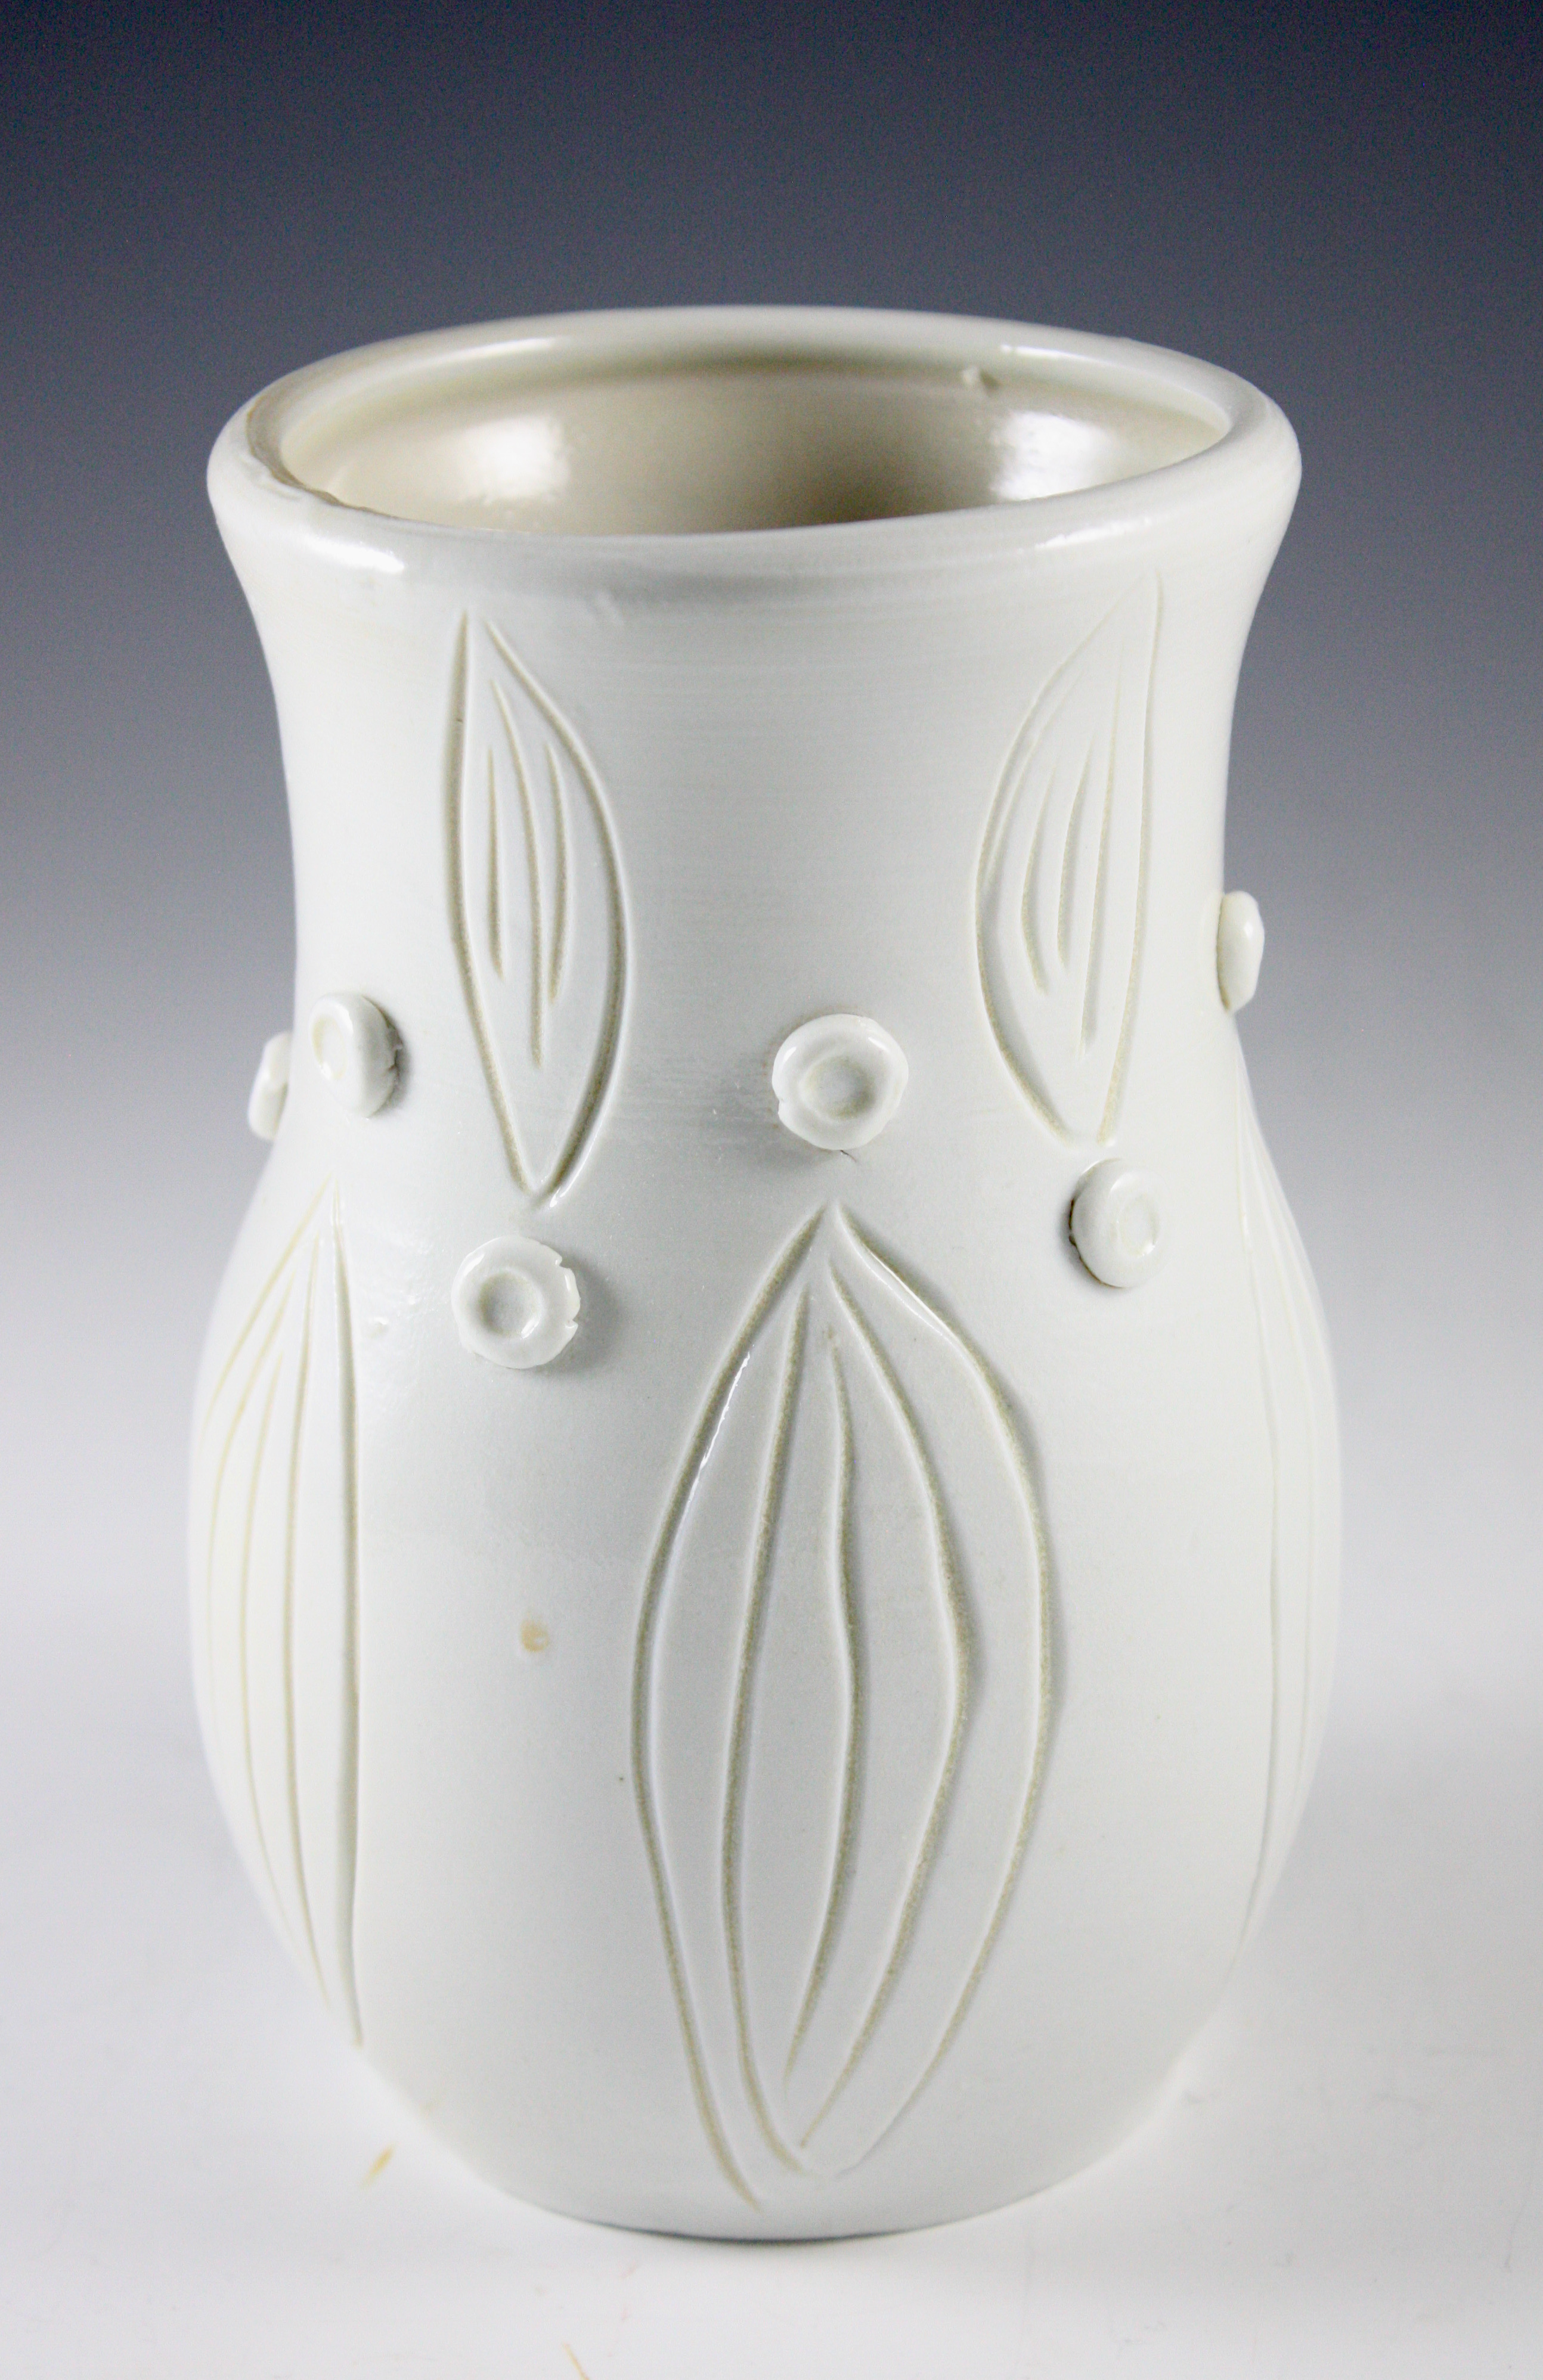 Carved Porcelain Vase with Button Decoration 21-325